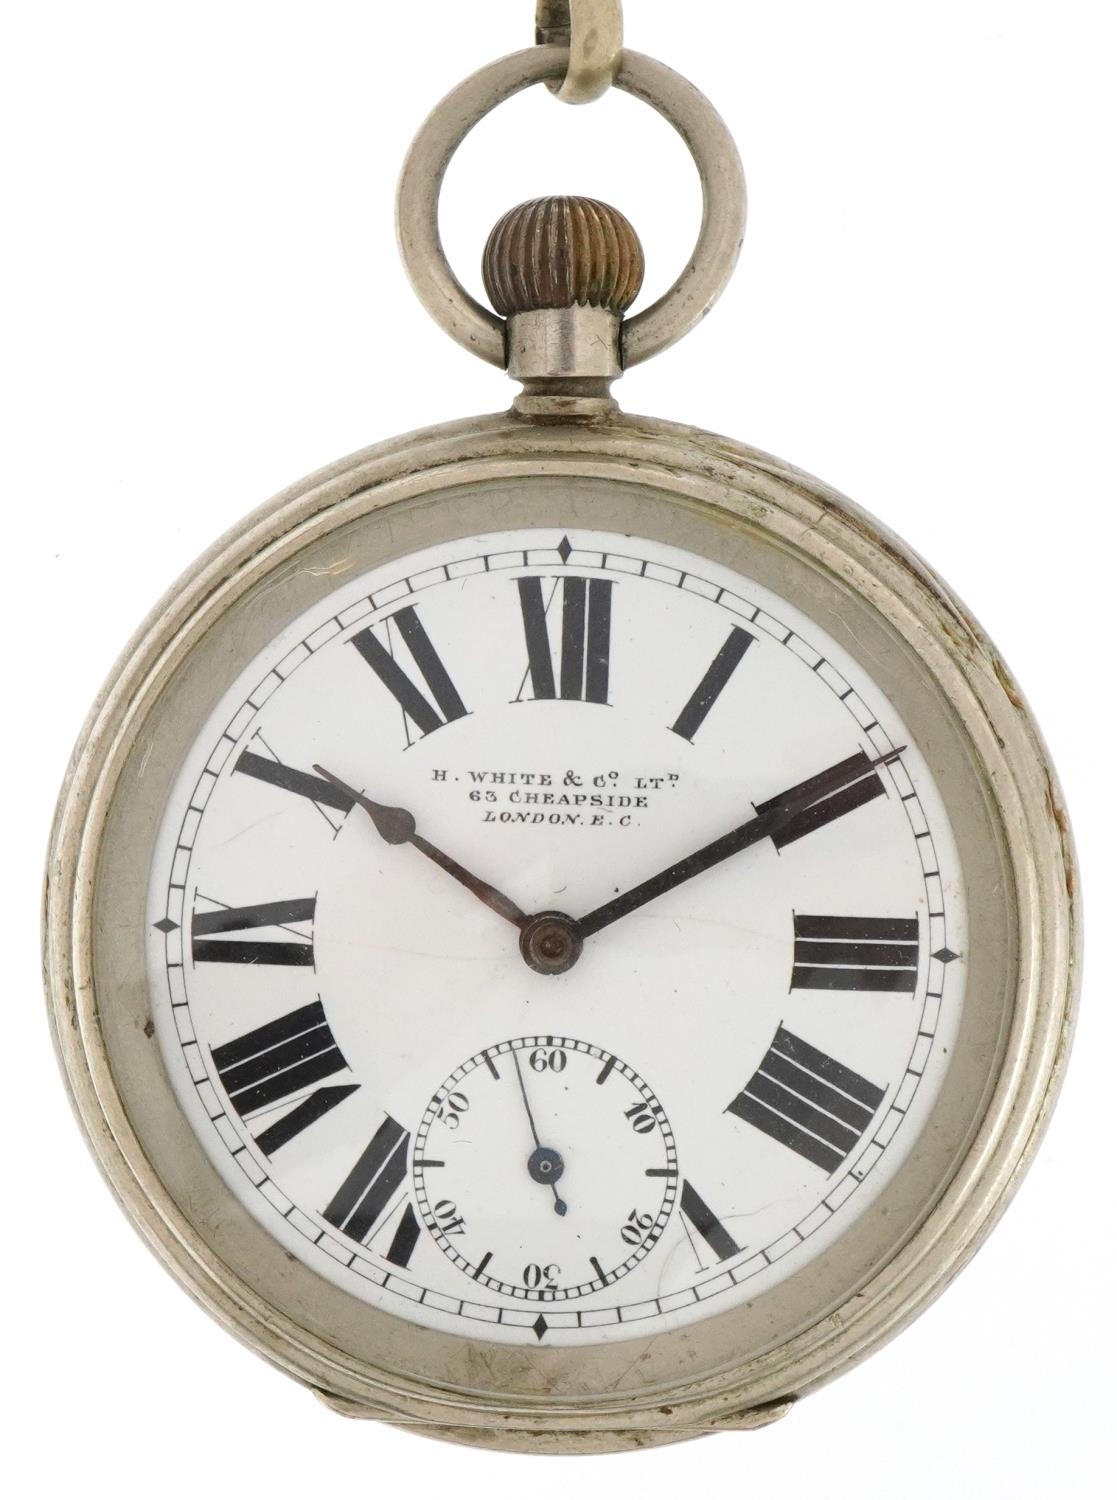 H White & Co Ltd, gentlemen's white metal open face keyless pocket watch having enamelled and - Image 2 of 5